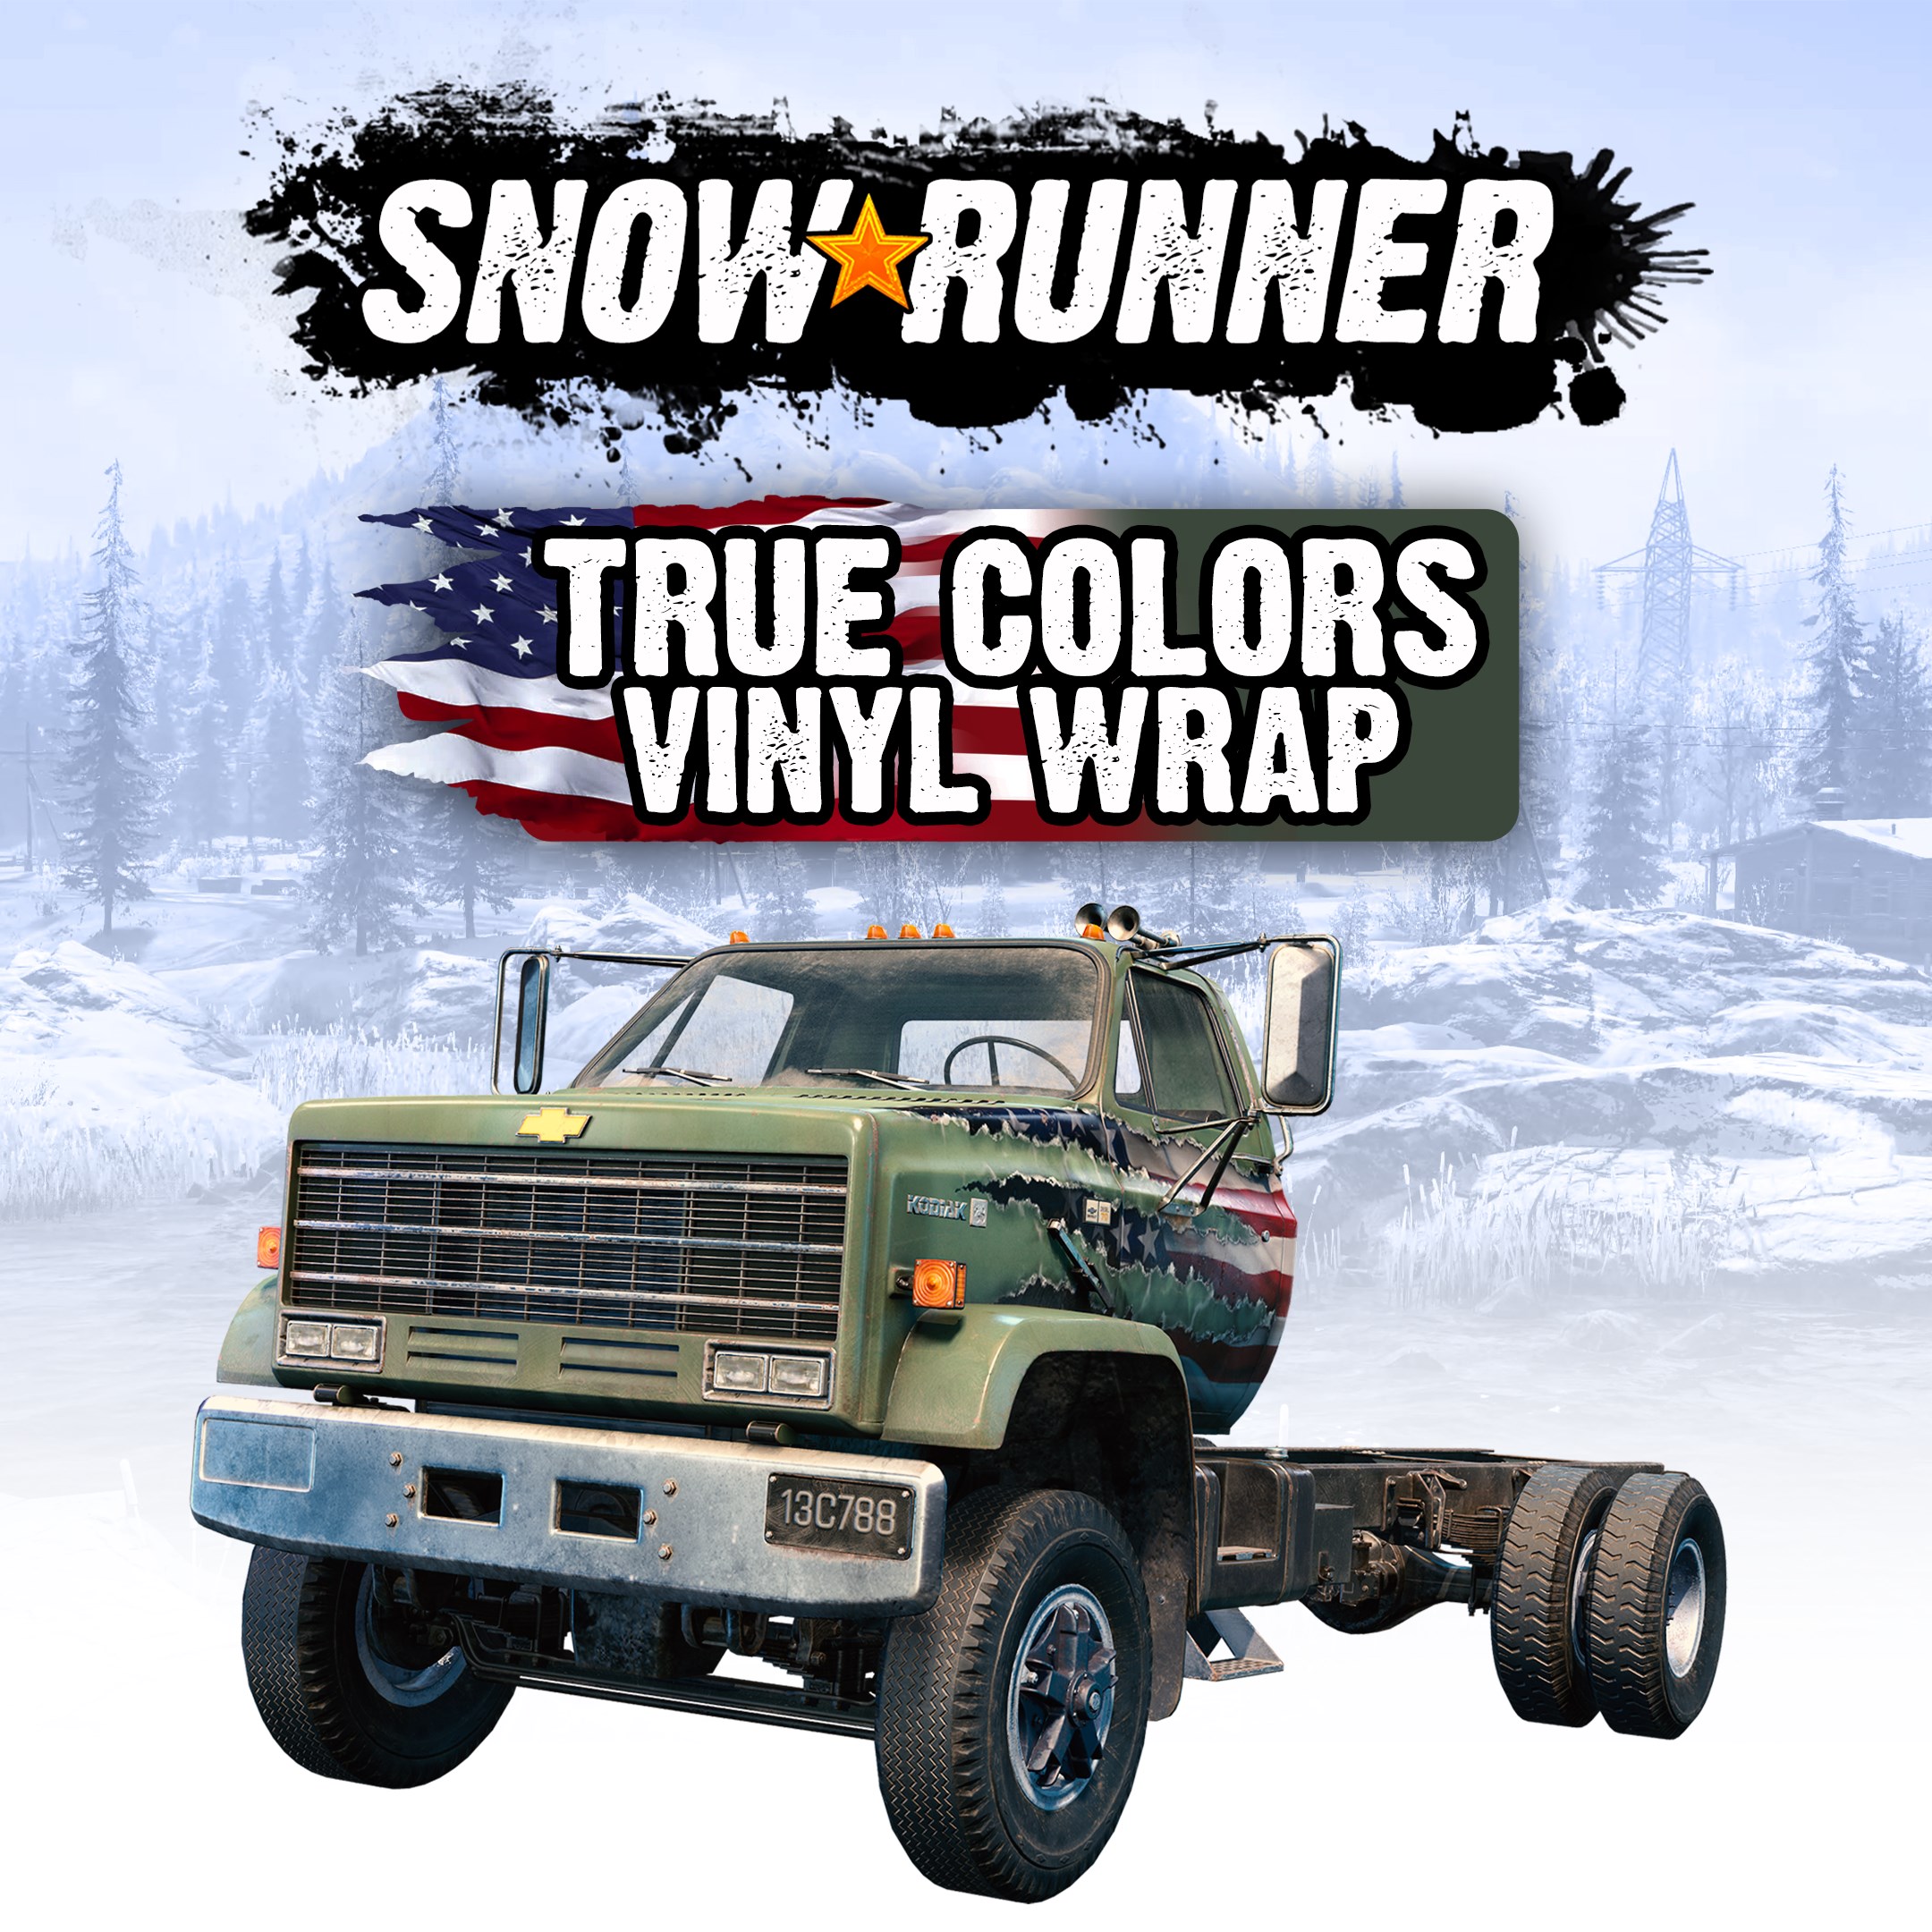 snowrunner xbox price